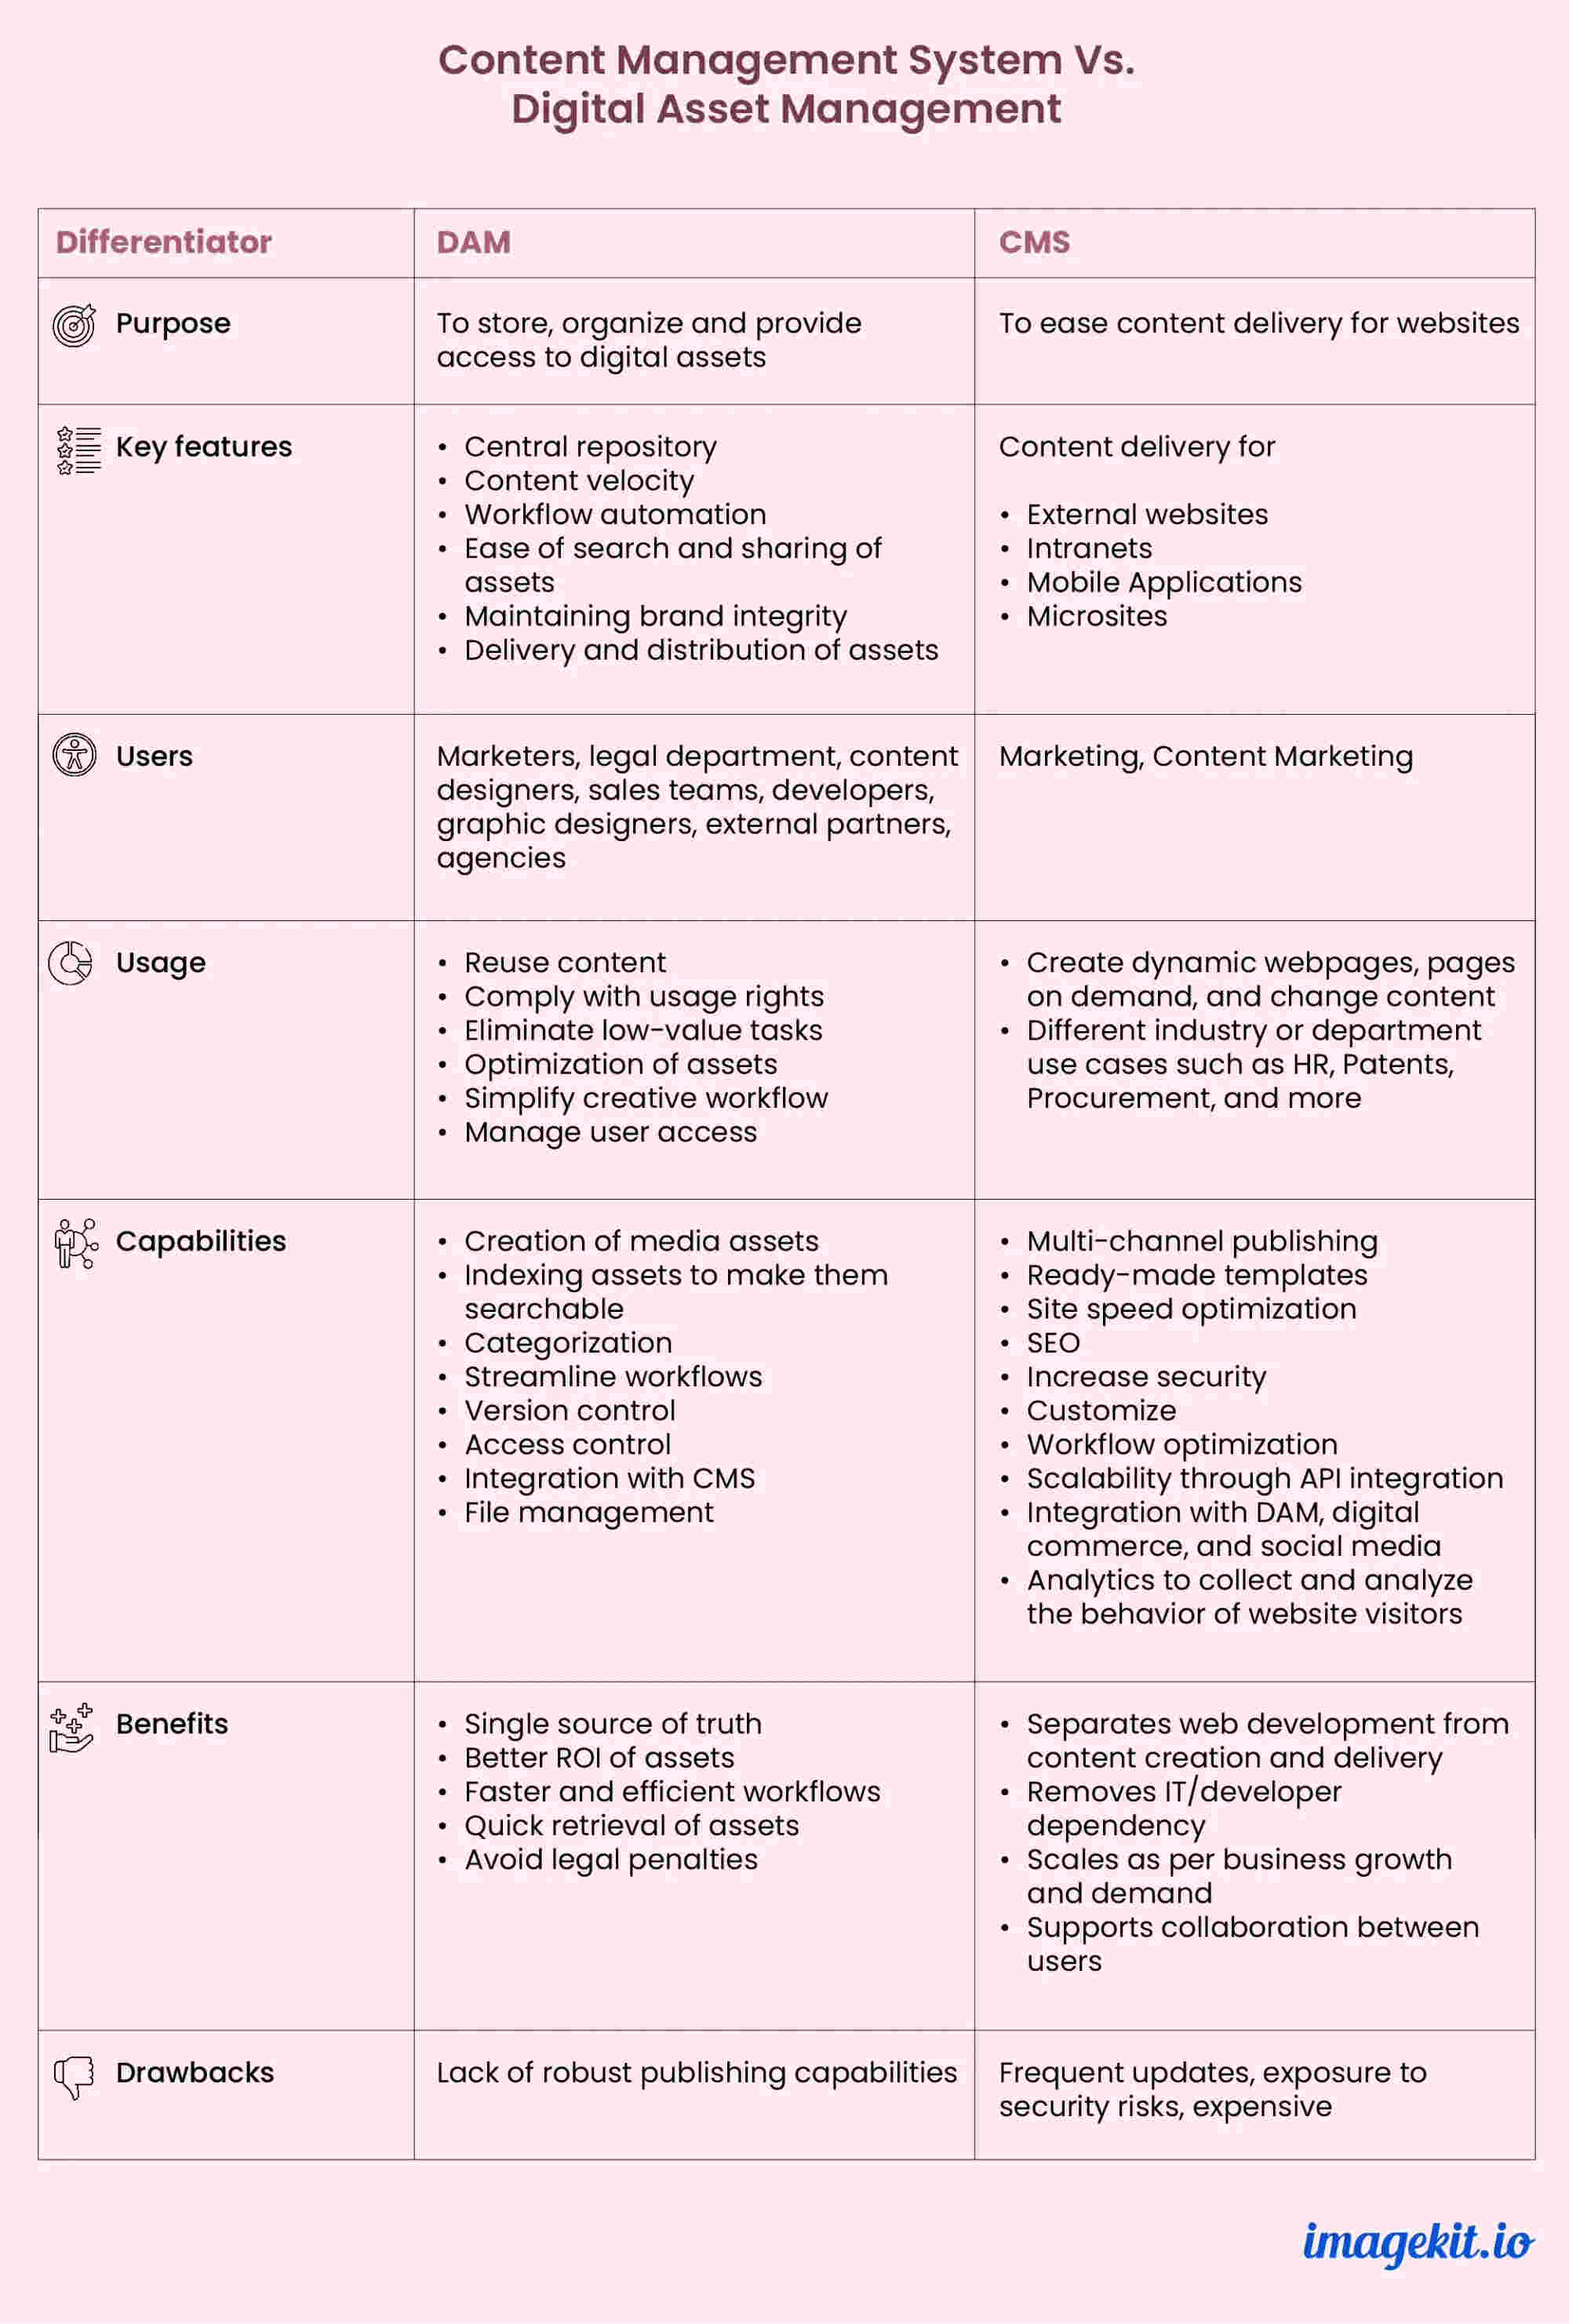 DAM Vs DAM - Table of differences | ImageKit blog